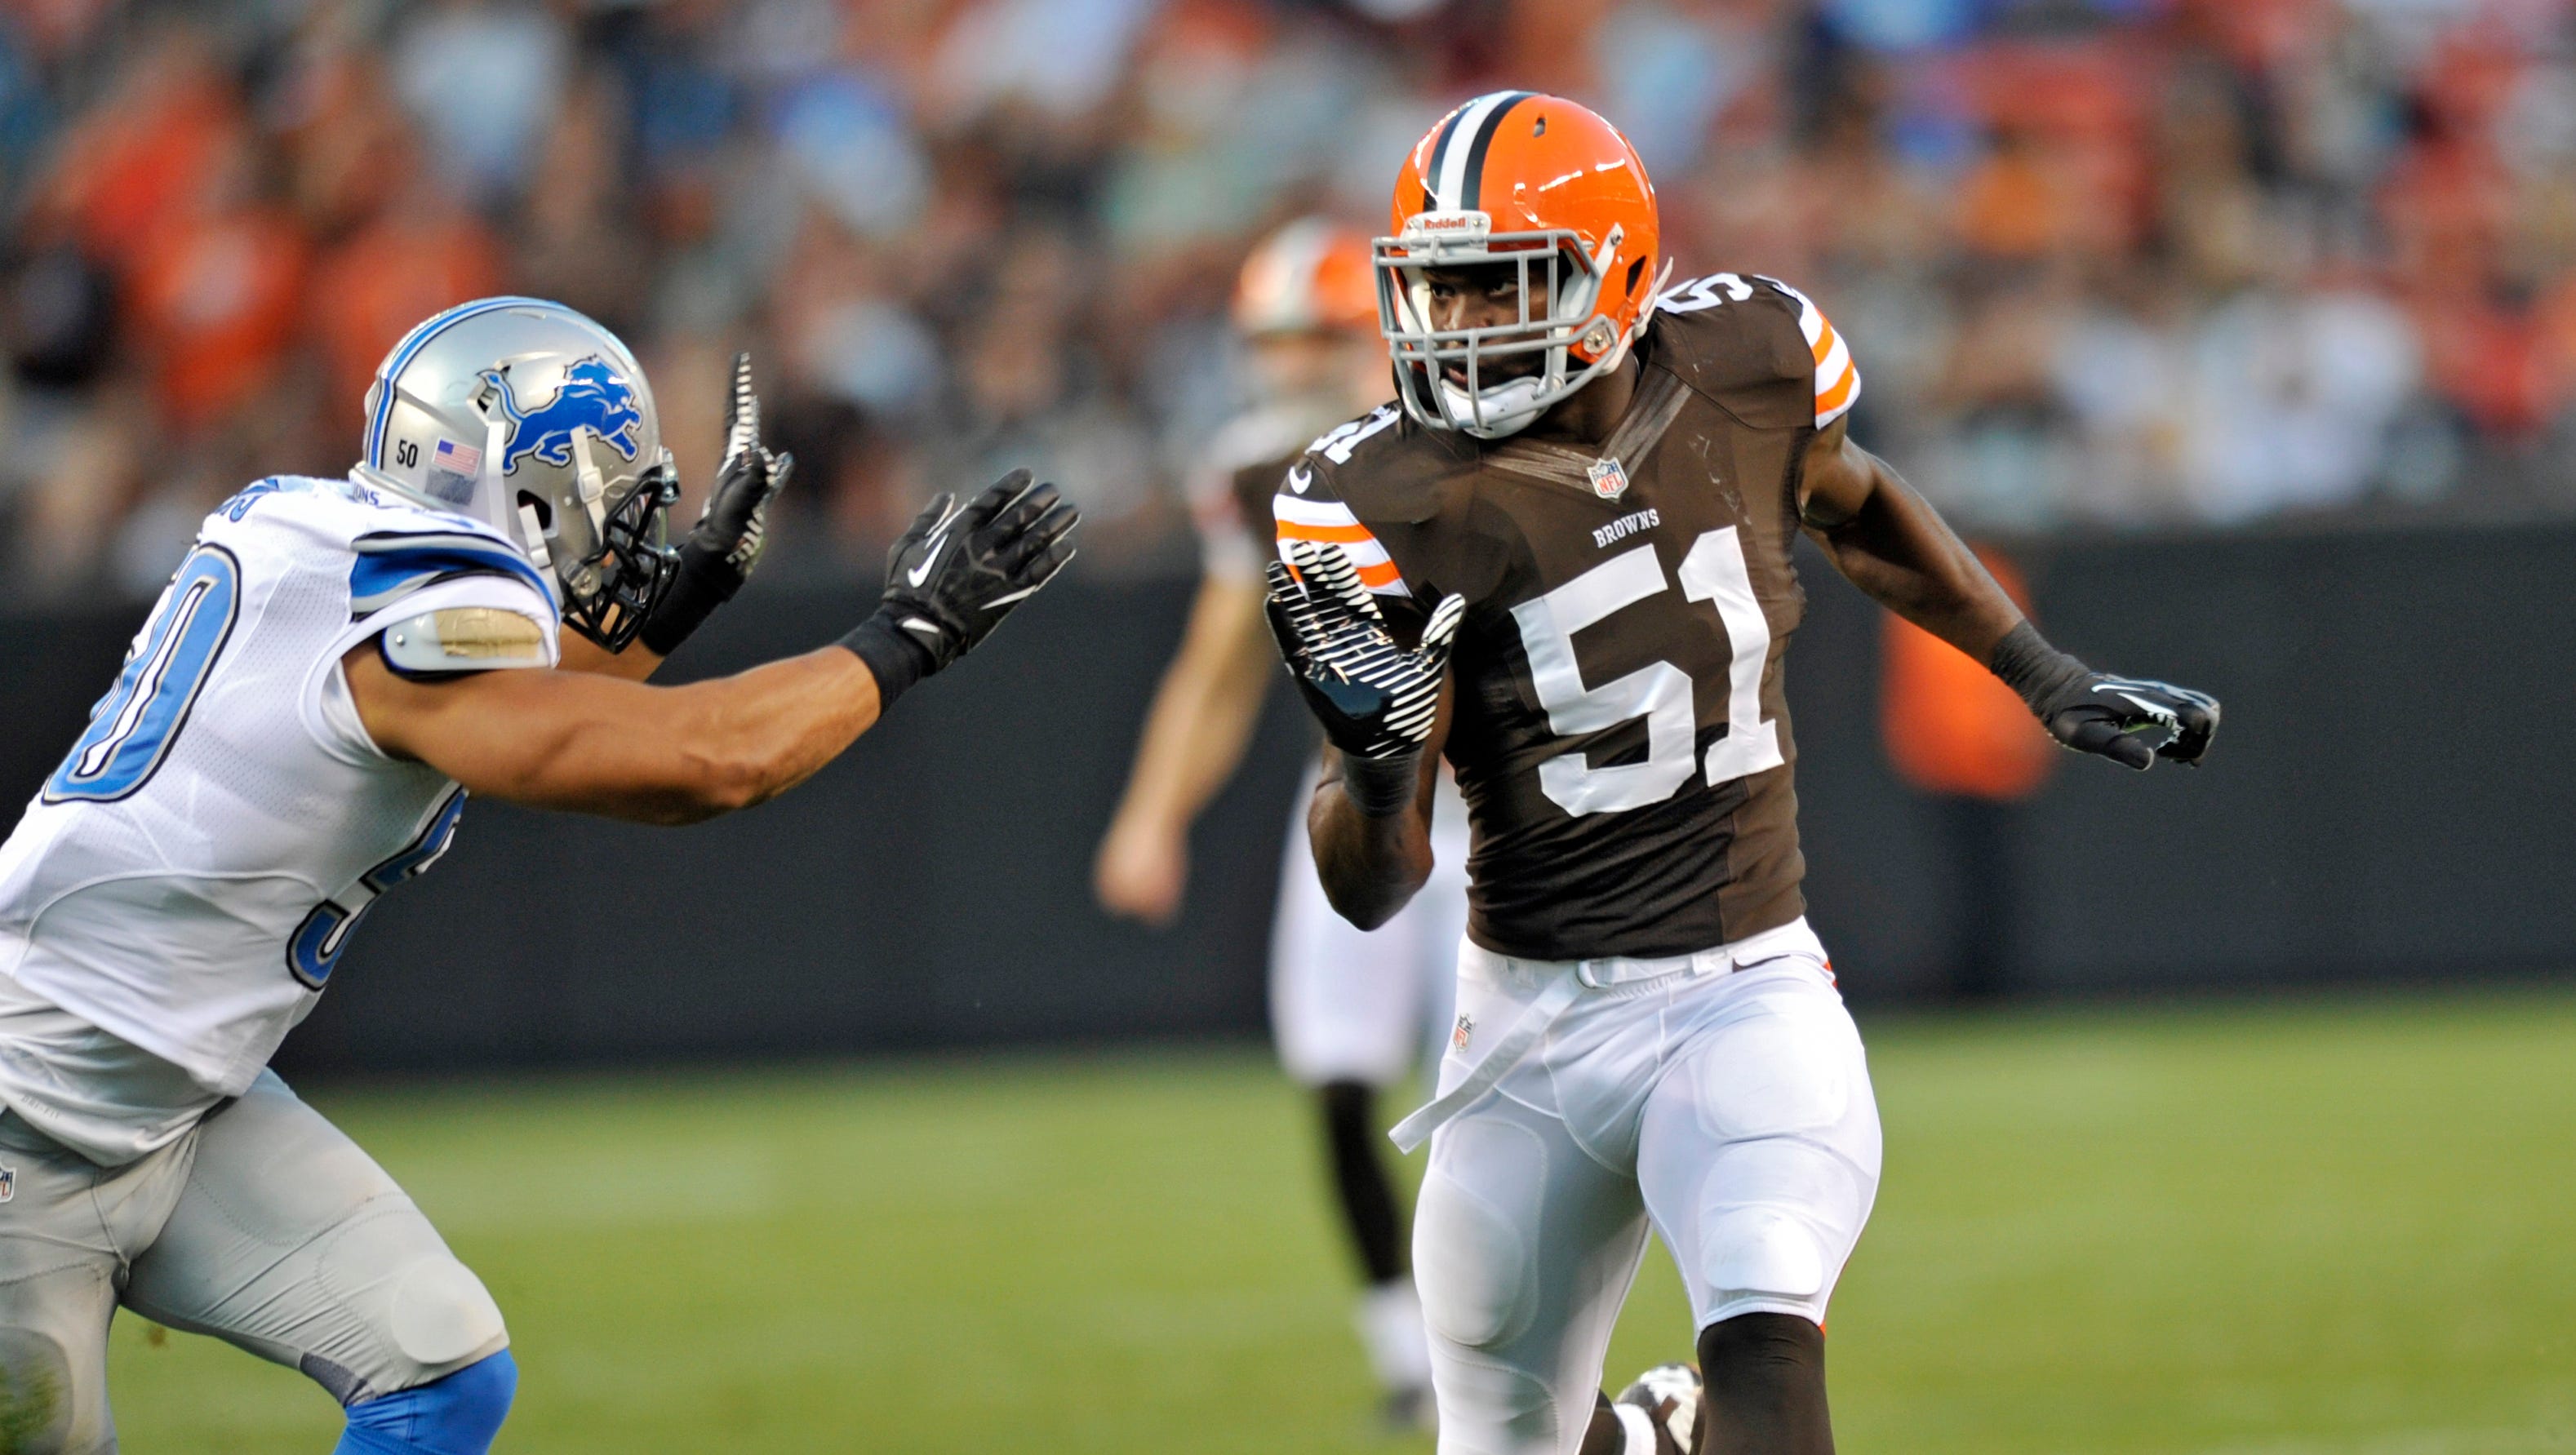 NFL injury roundup: Browns' Barkevious Mingo hospitalized